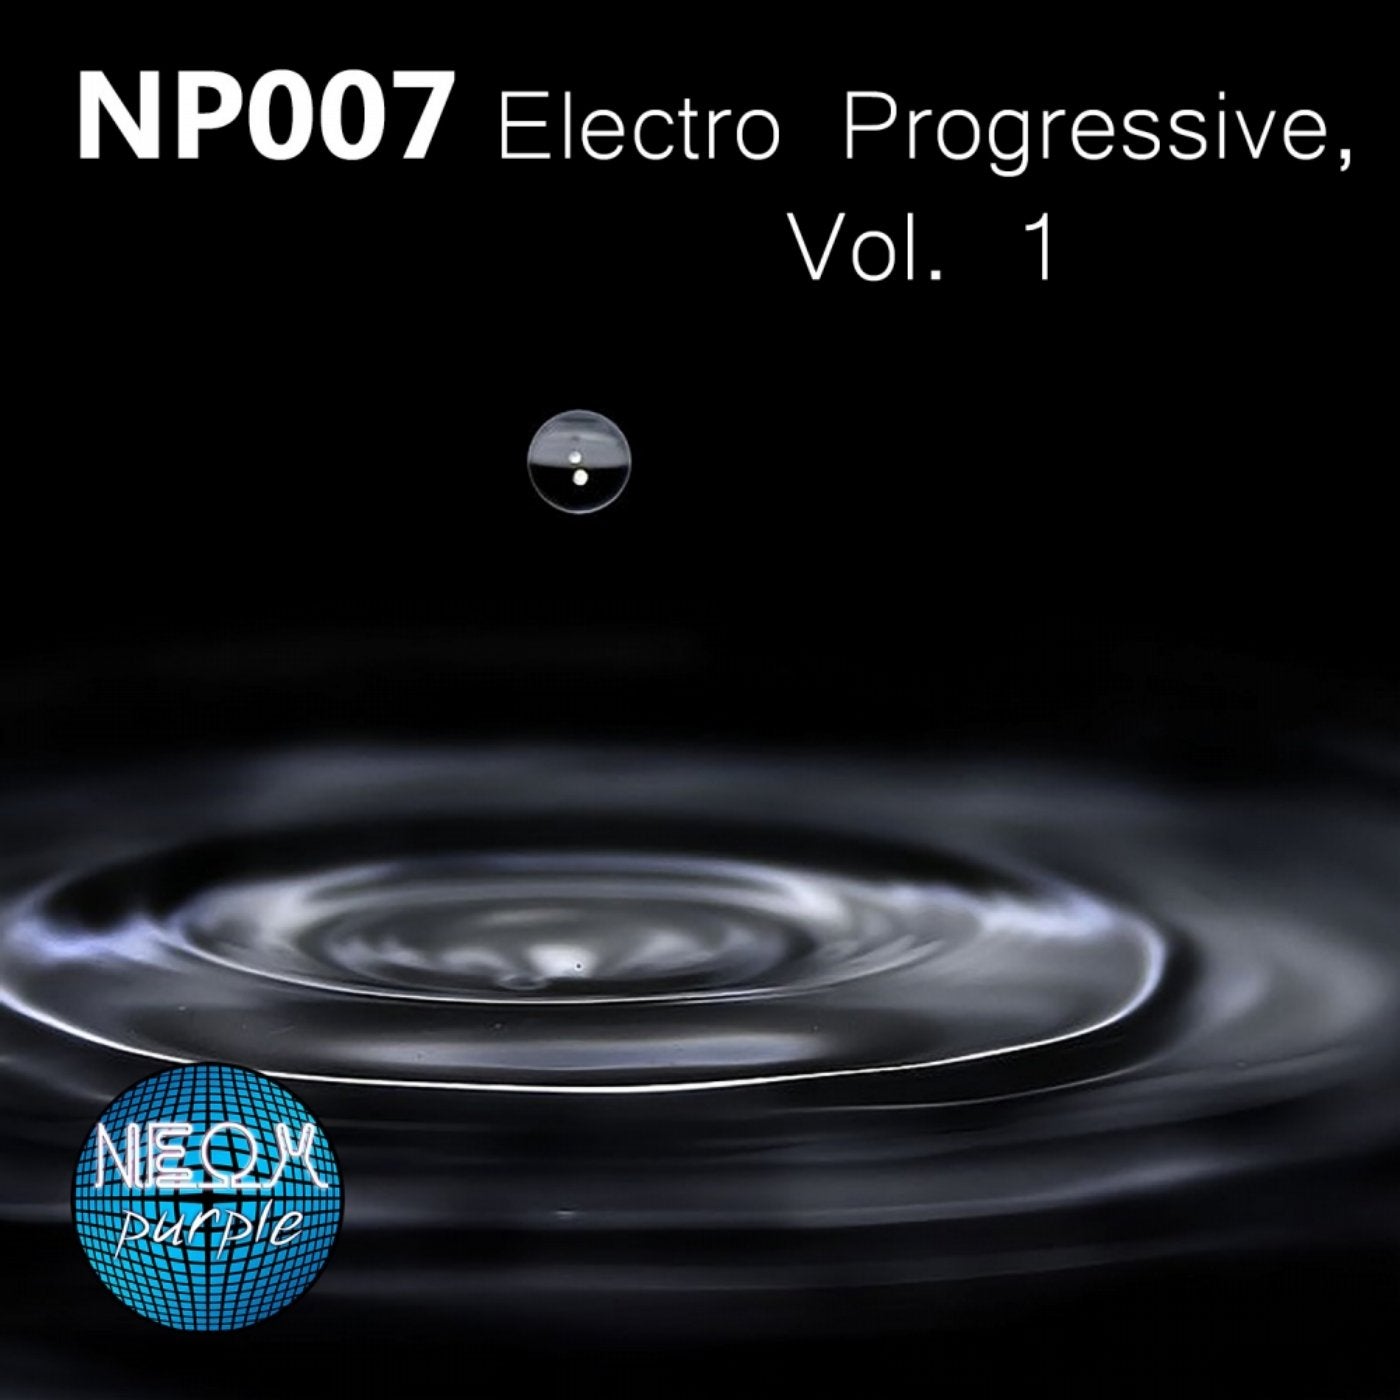 Electro Progressive, Vol. 1